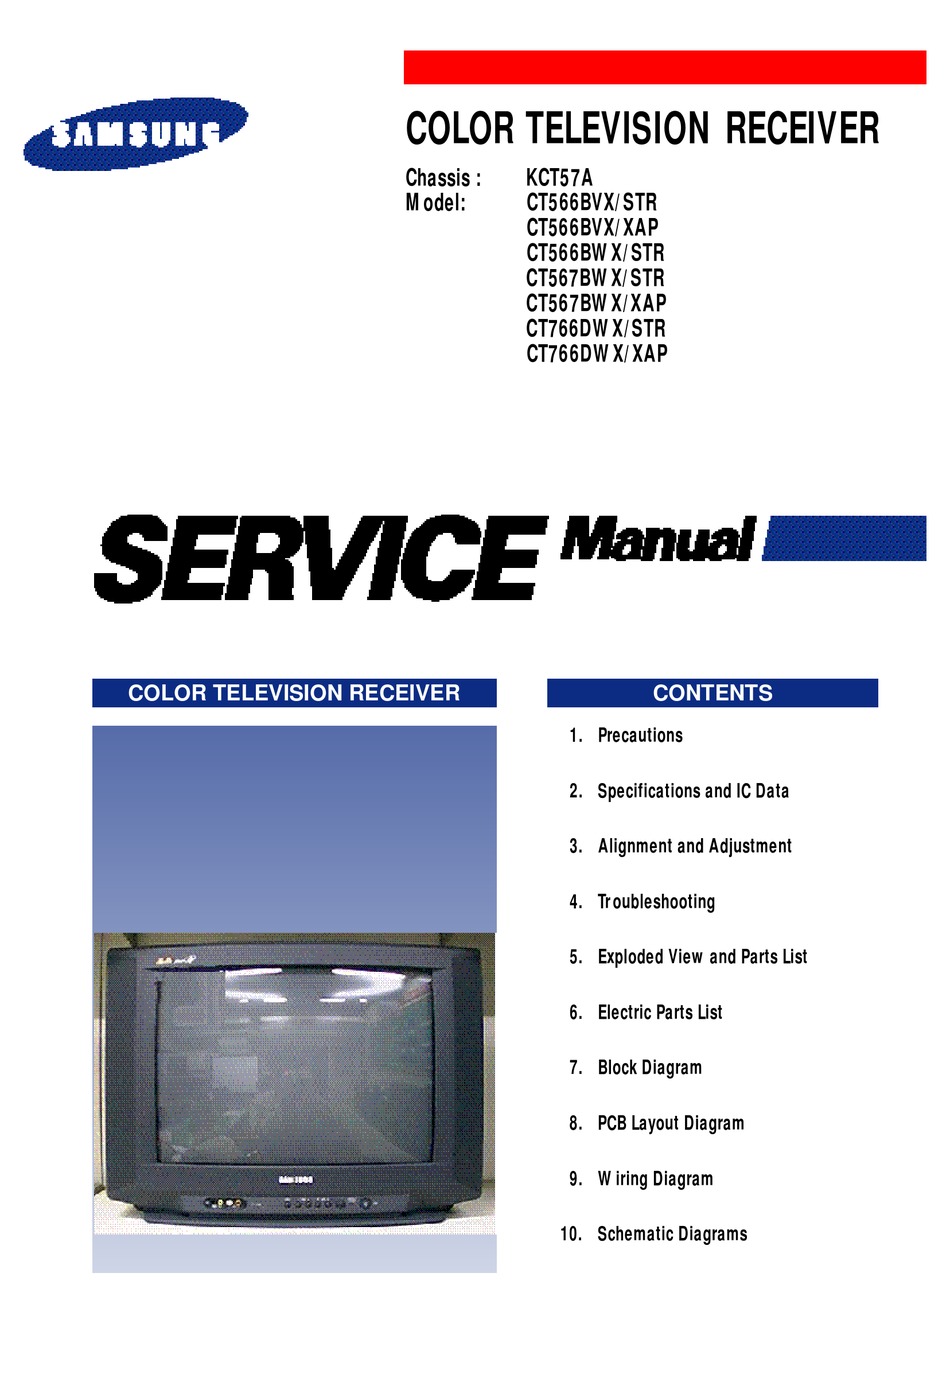 SAMSUNG CT566BVX/STR SERVICE MANUAL Pdf Download | ManualsLib